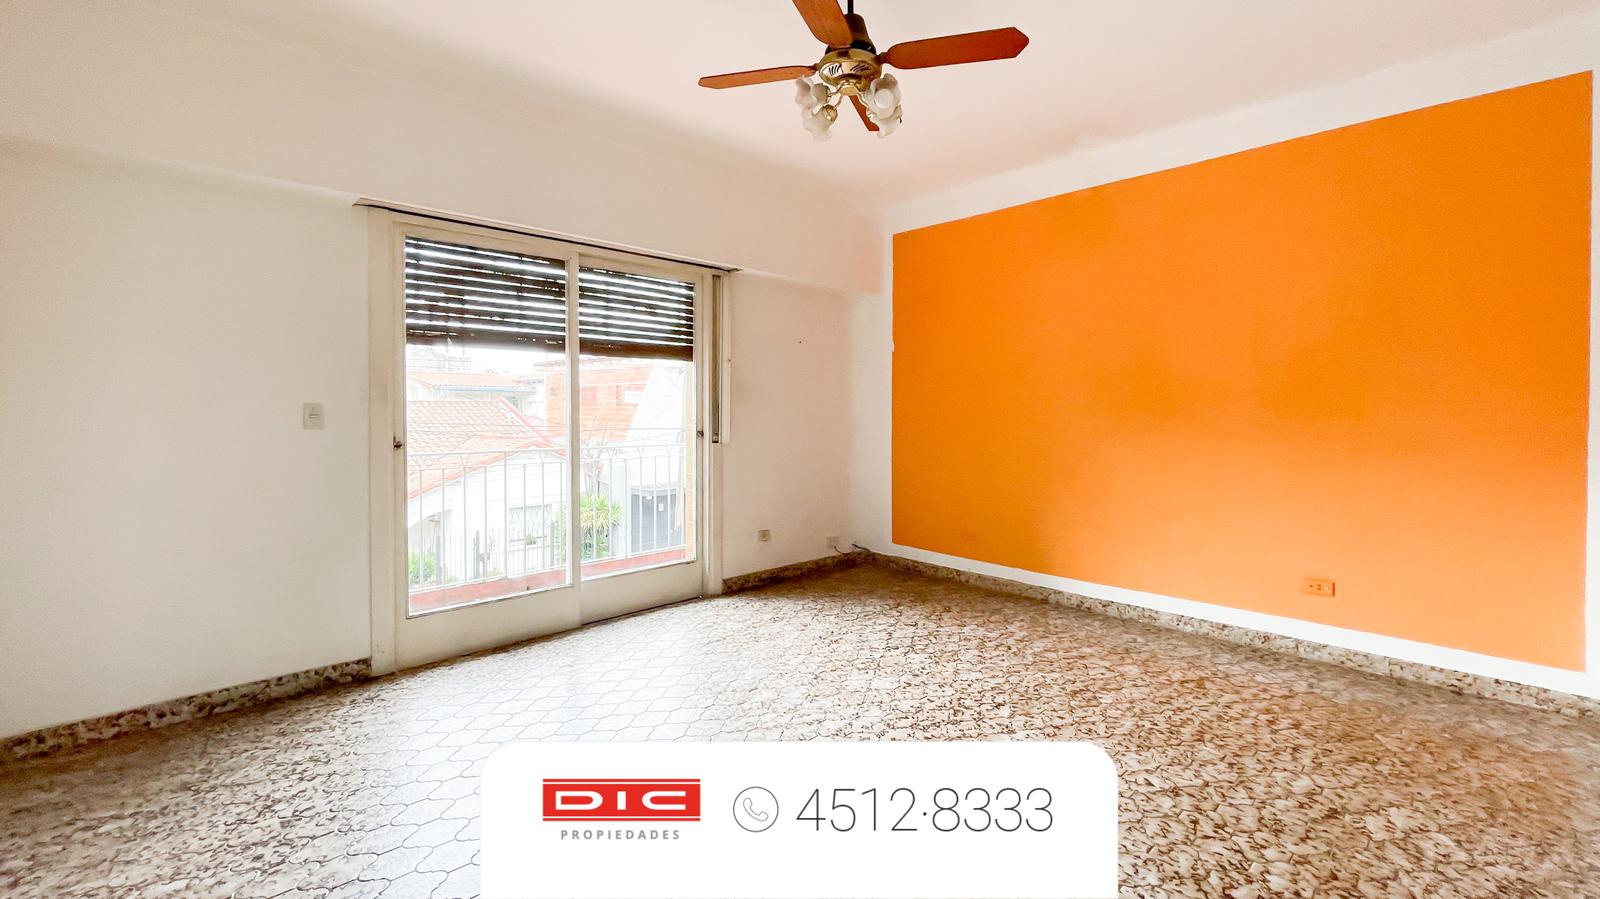 #4937979 | Sale | Horizontal Property | Villa Adelina (Dic Propiedades)